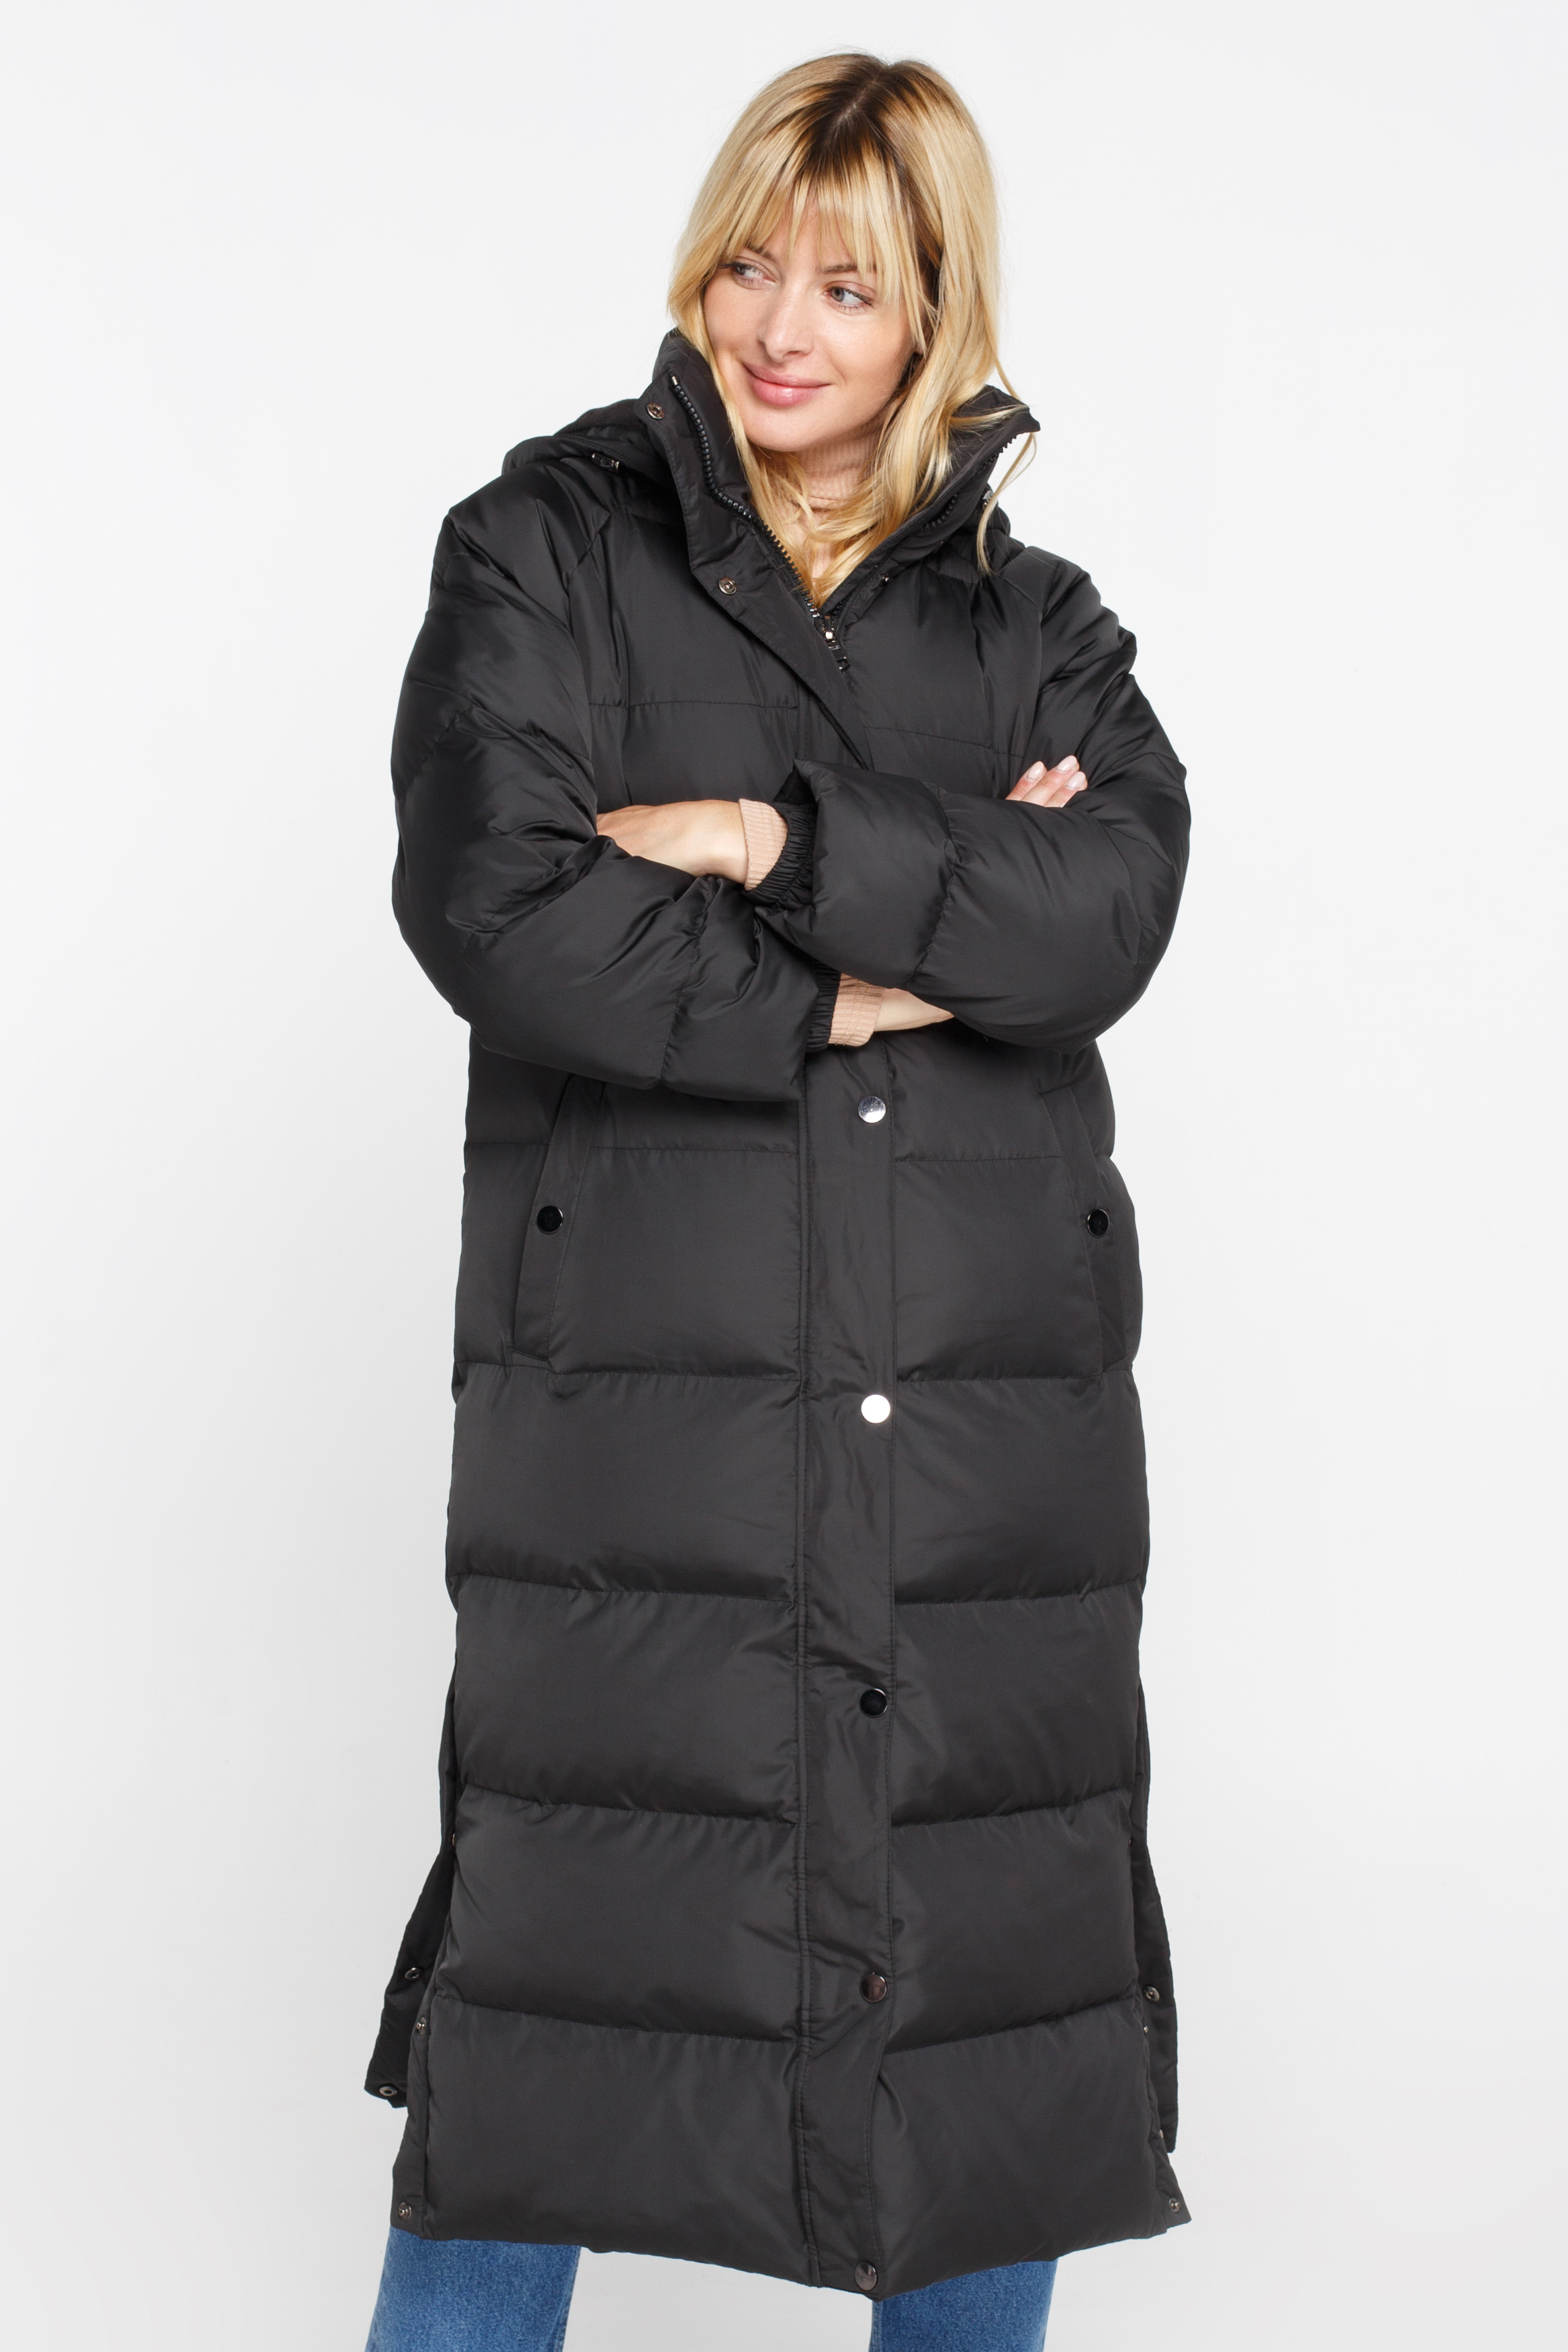 Midi black down jacket with hood, photo 1